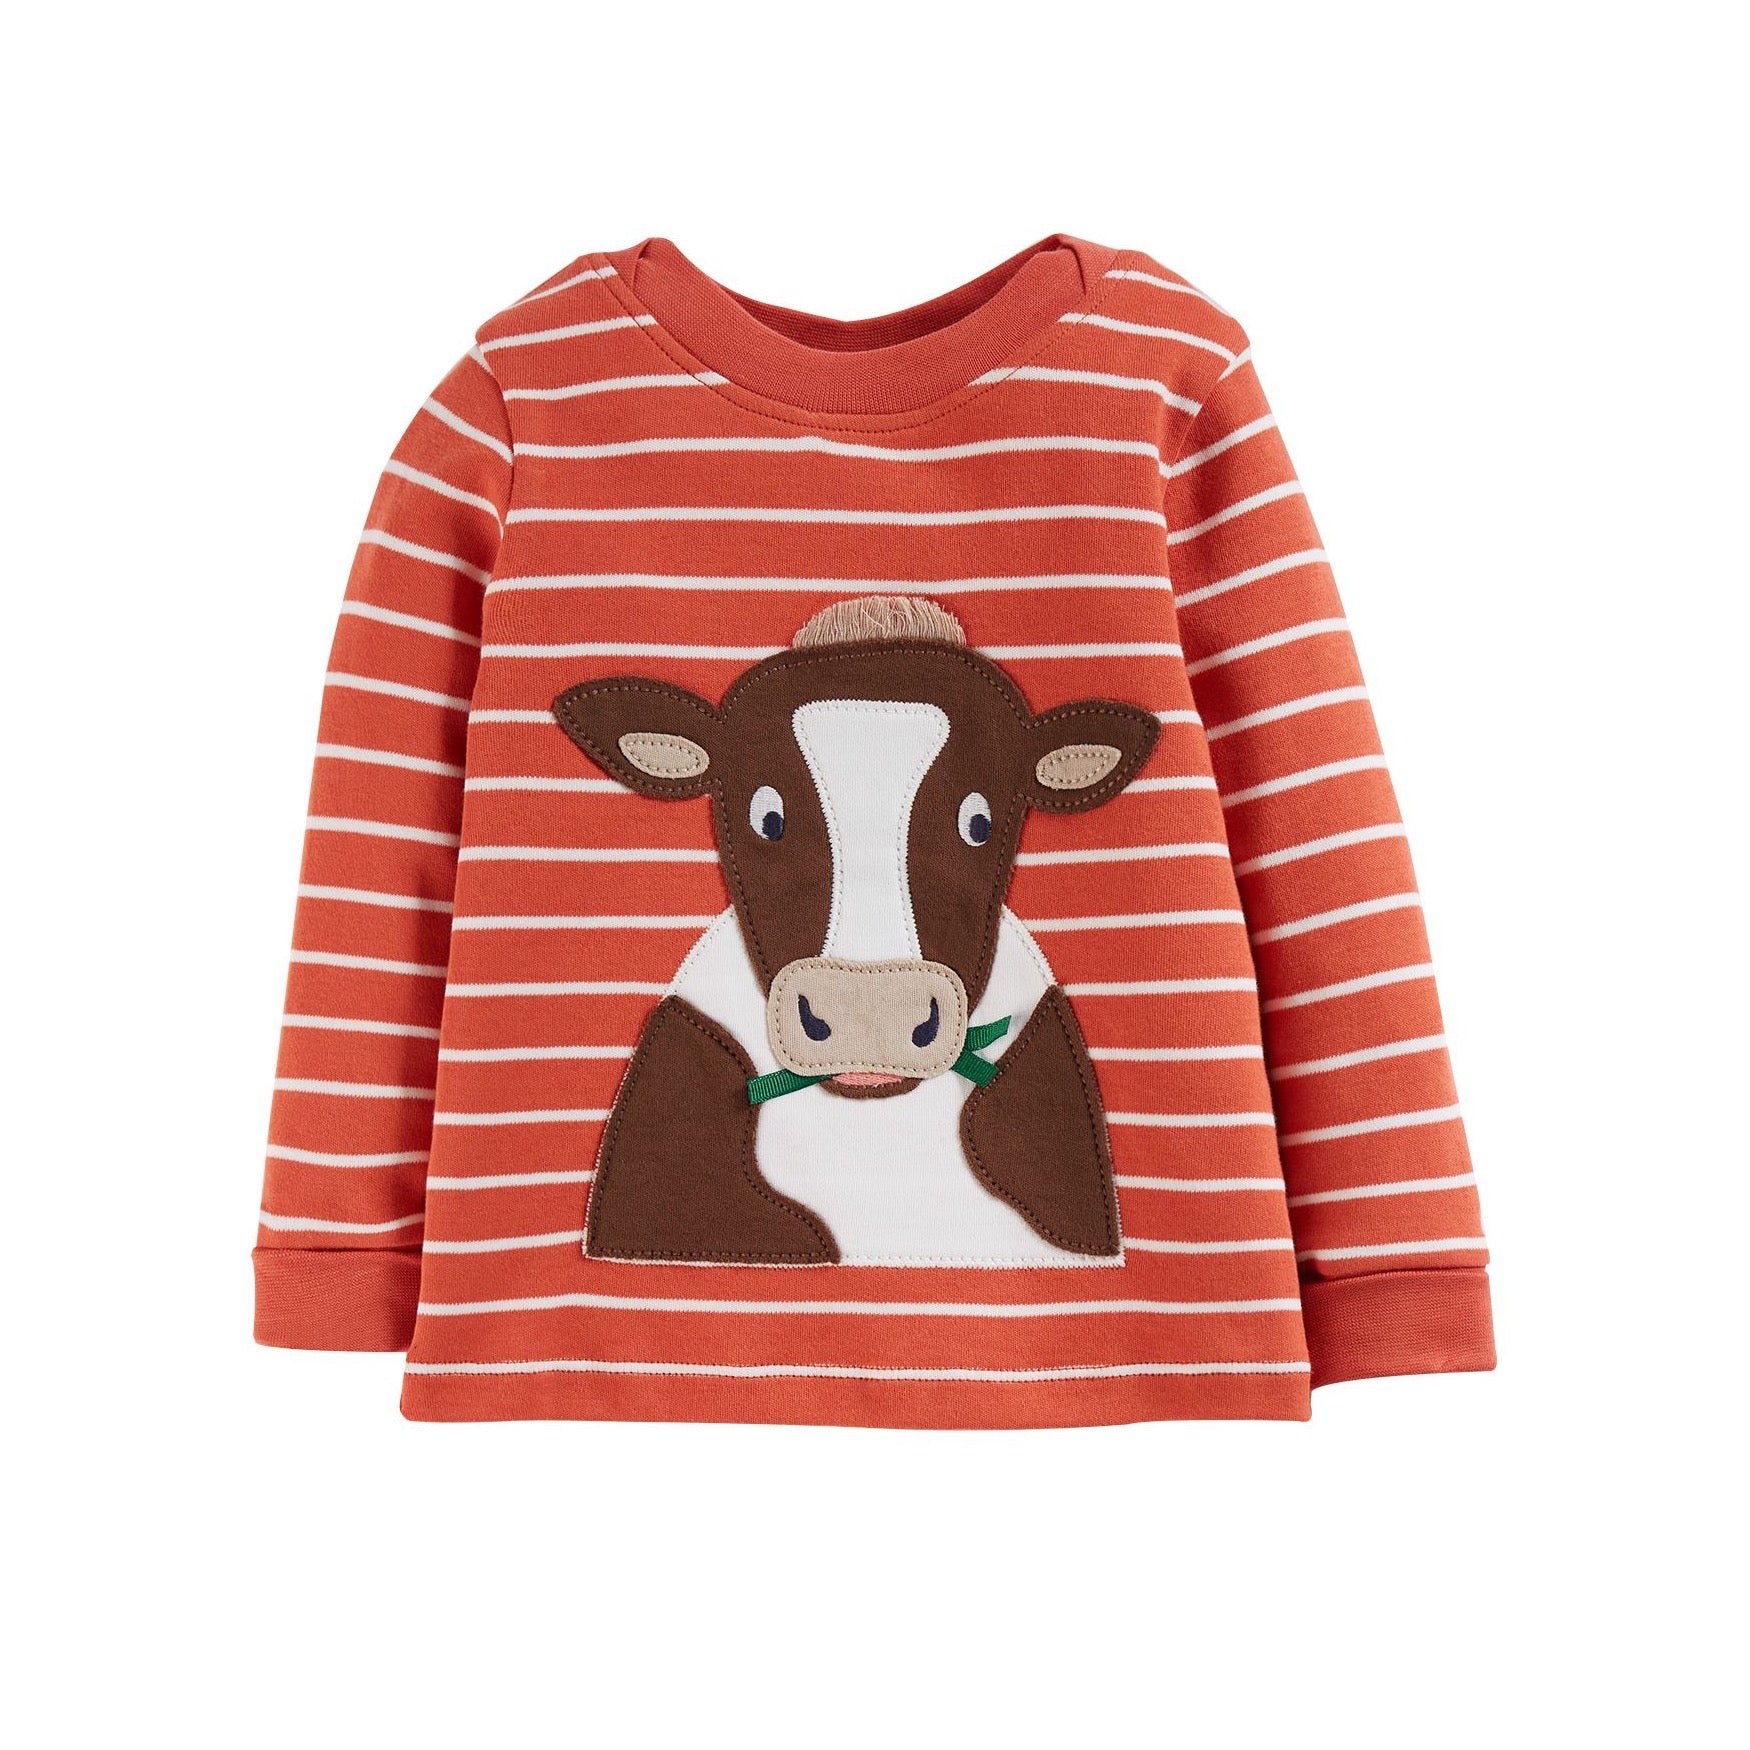 Frugi Easy On Infant T-Shirt Breton Cow Clothing 0-3M / Paprika,3-6M / Paprika,6-9M / Paprika,9-12M / Paprika,12-18M / Paprika,18-24M / Paprika,2-3YRS / Paprika,3-4YRS / Paprika